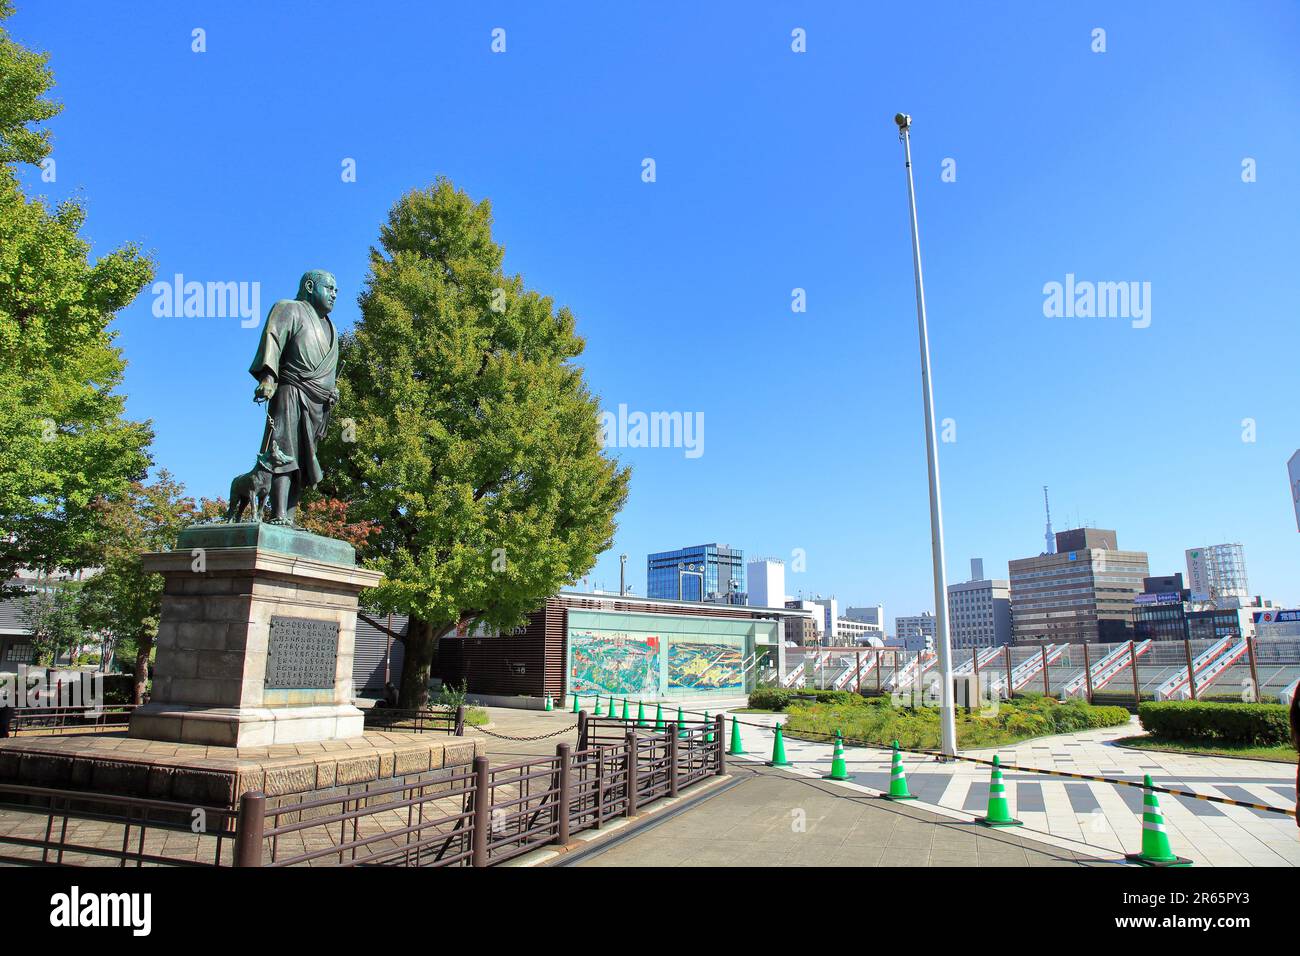 Ueno Station area seen from the statue of Takamori Saigo Stock Photo